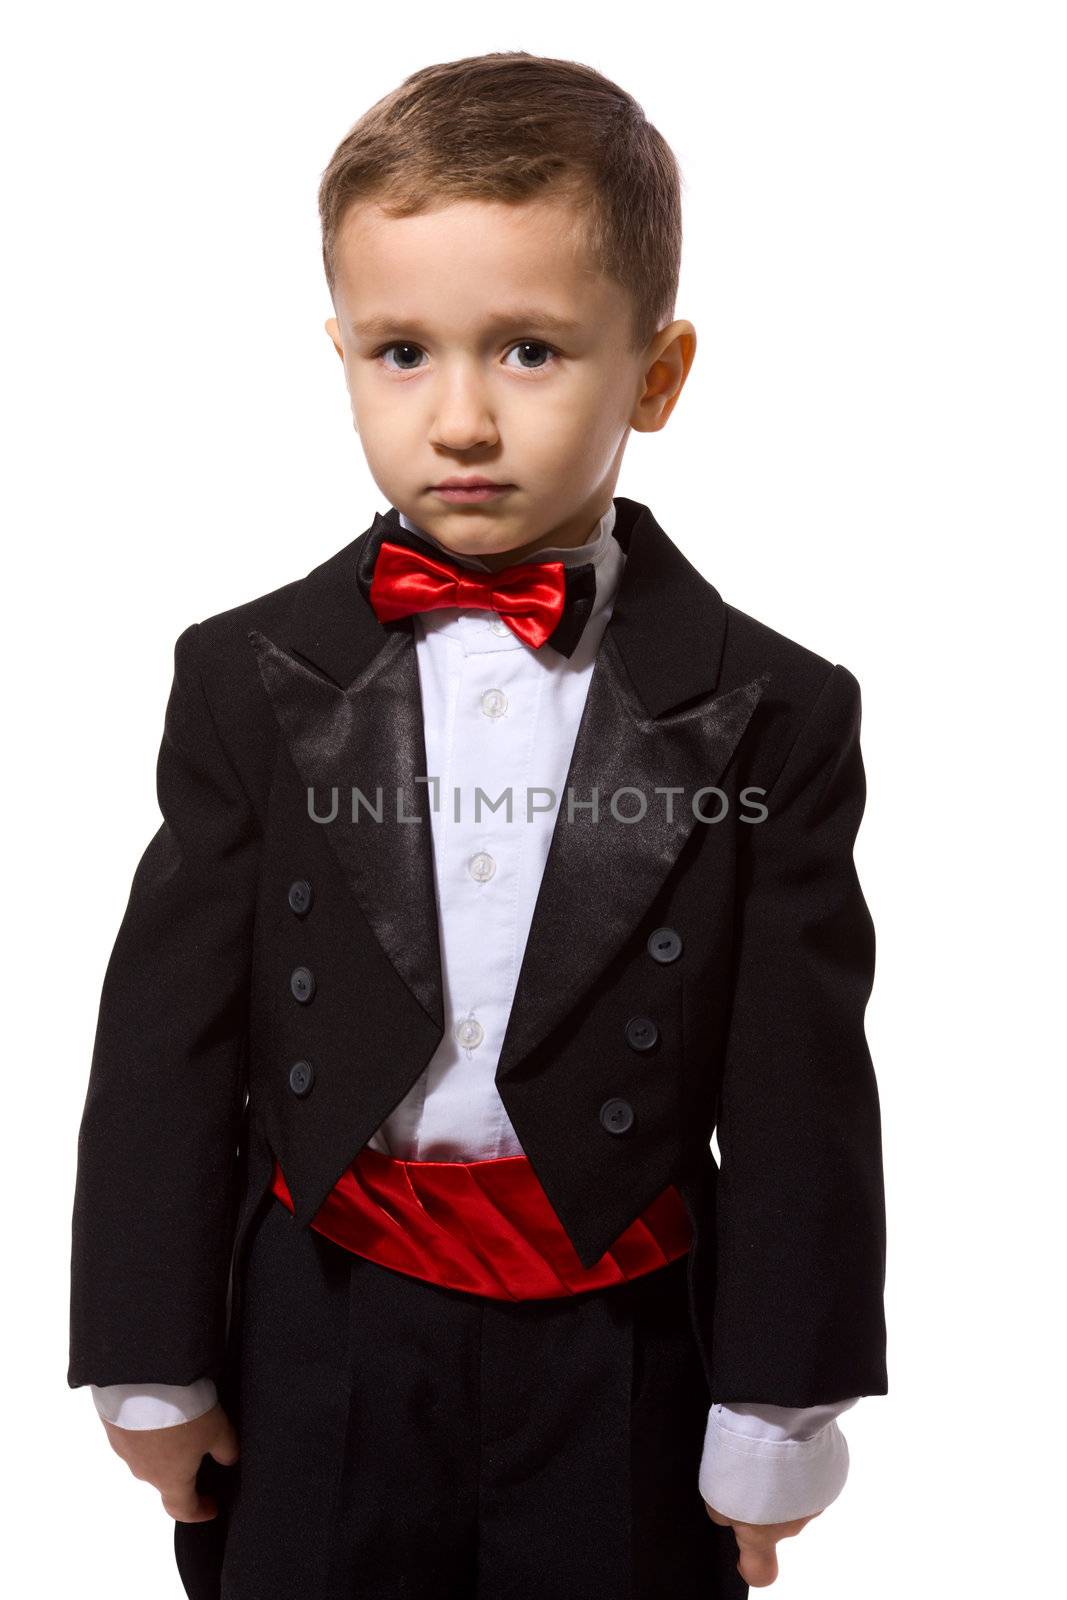 Little Boy wearing tuxedo portrait isolated on white